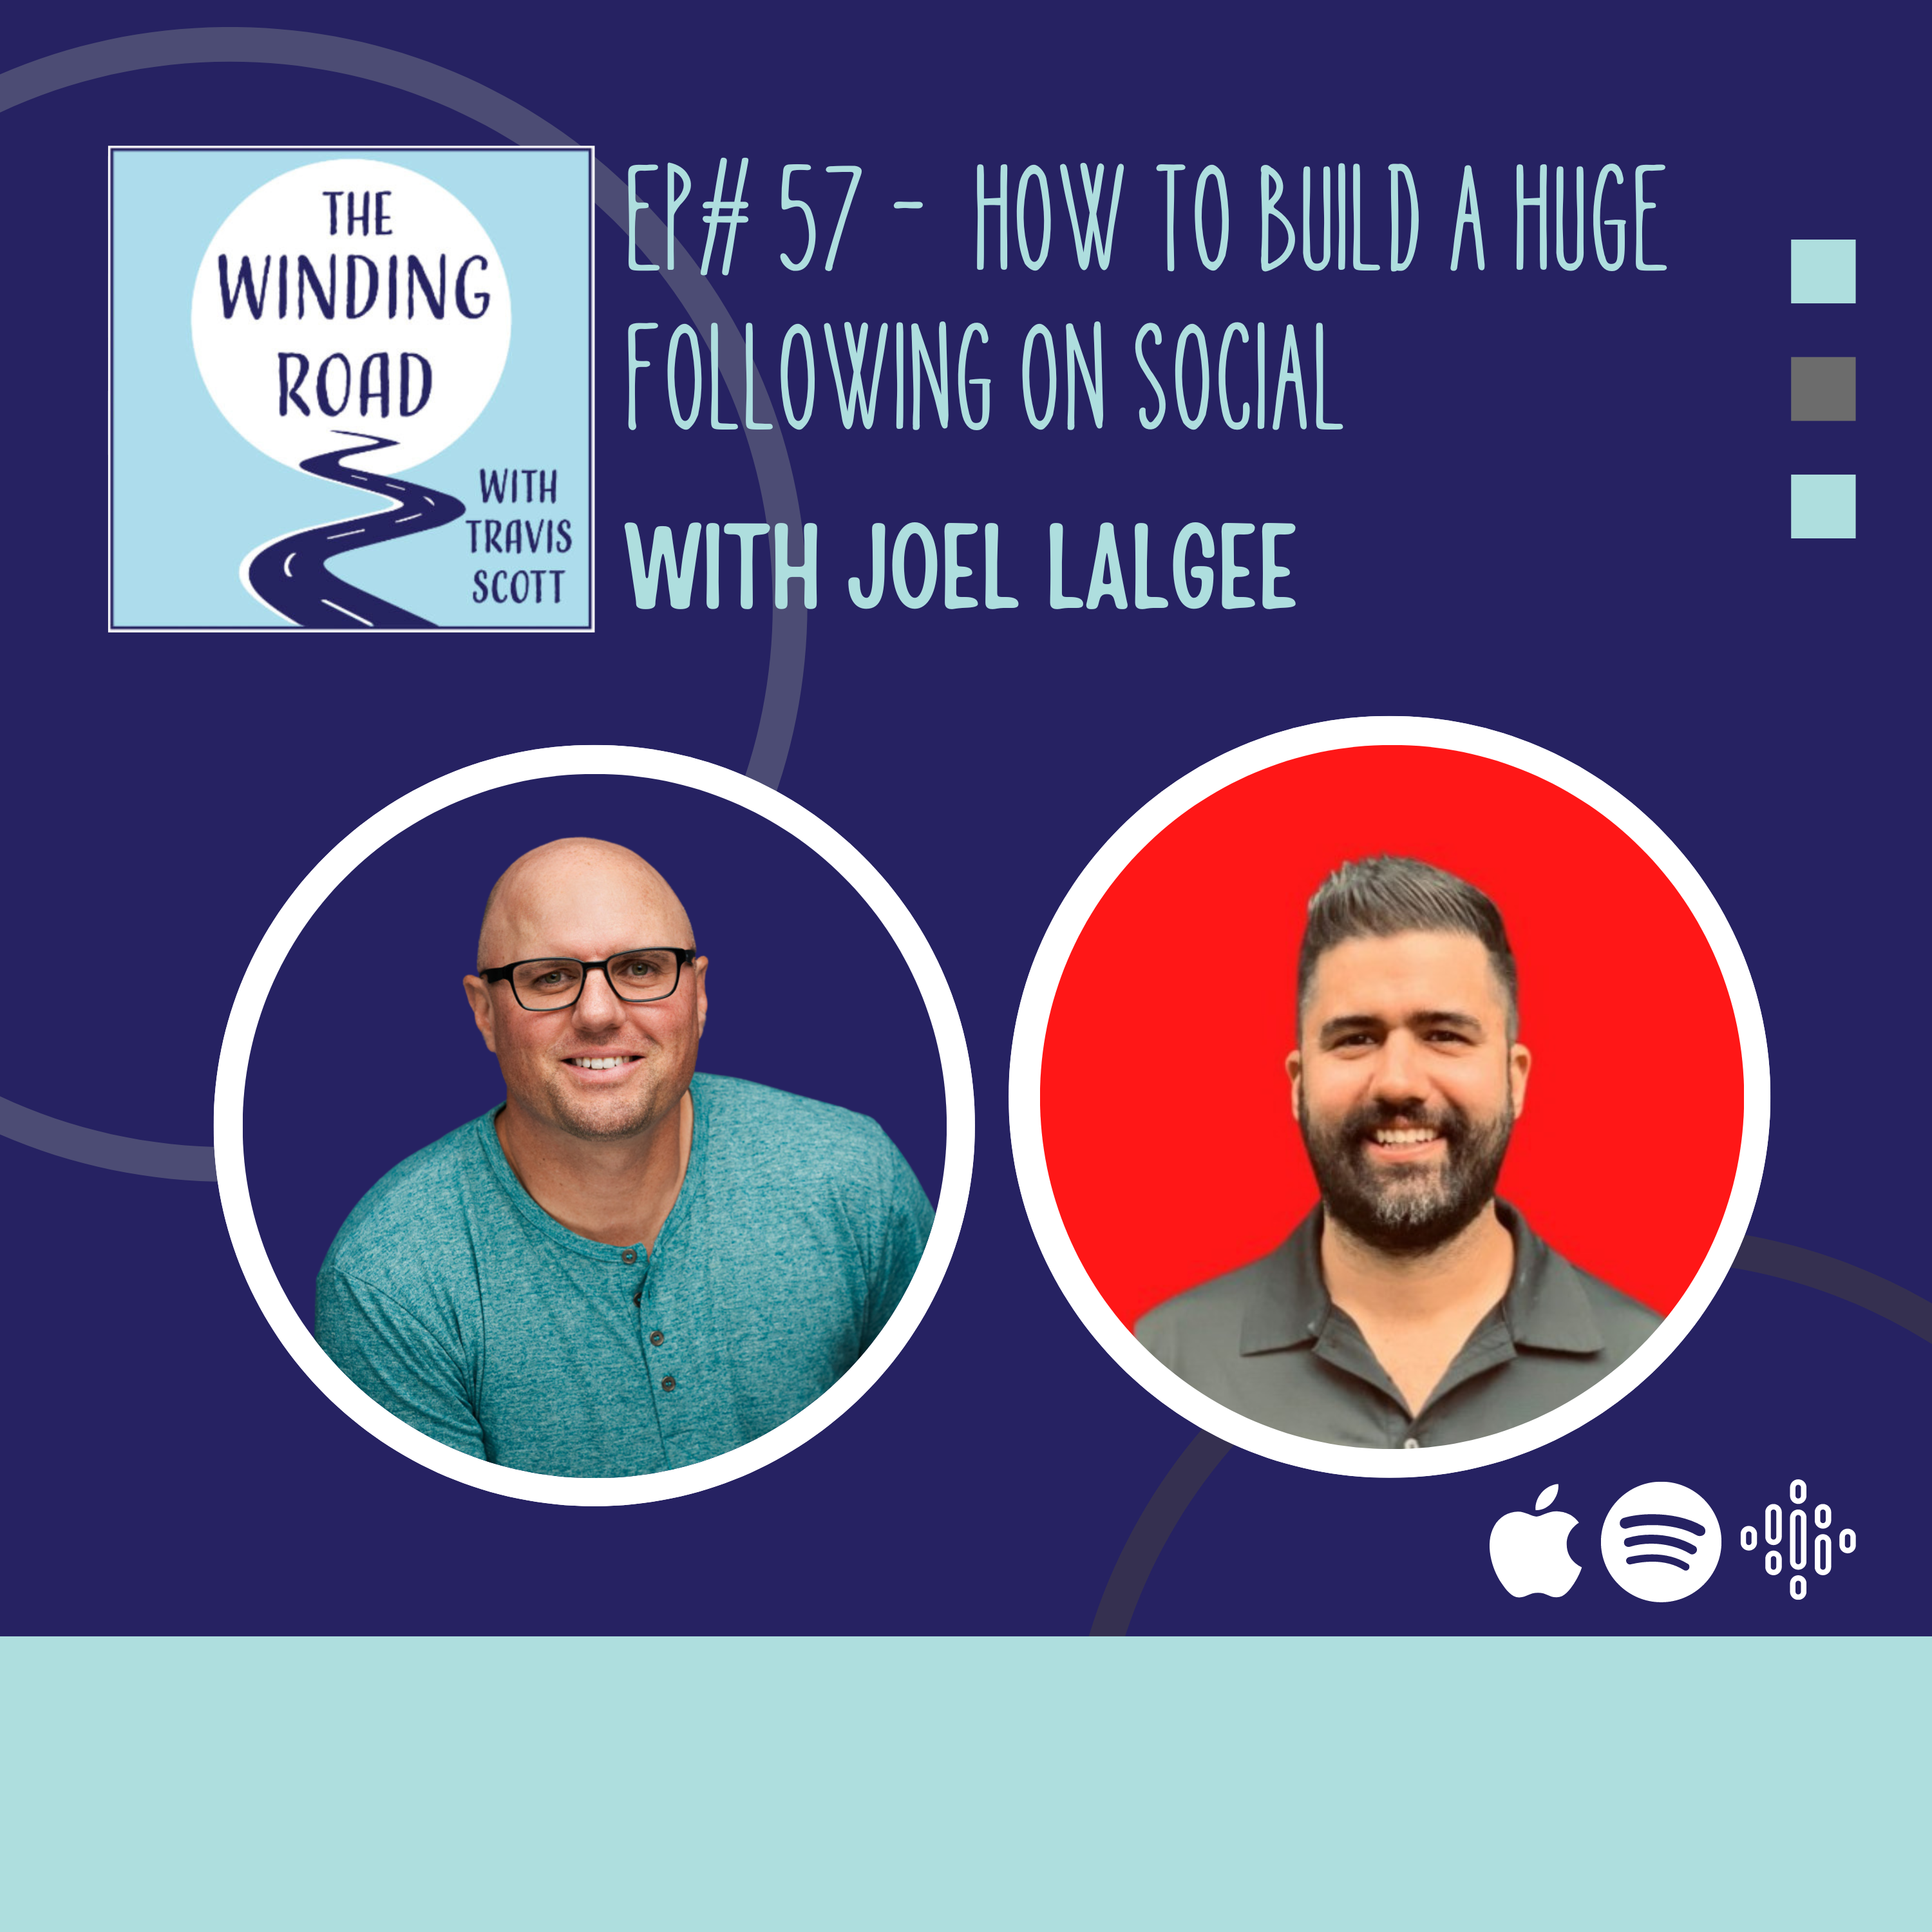 Joel Lalgee is a social influencer on LinkedIn, Twitter, and TikTok